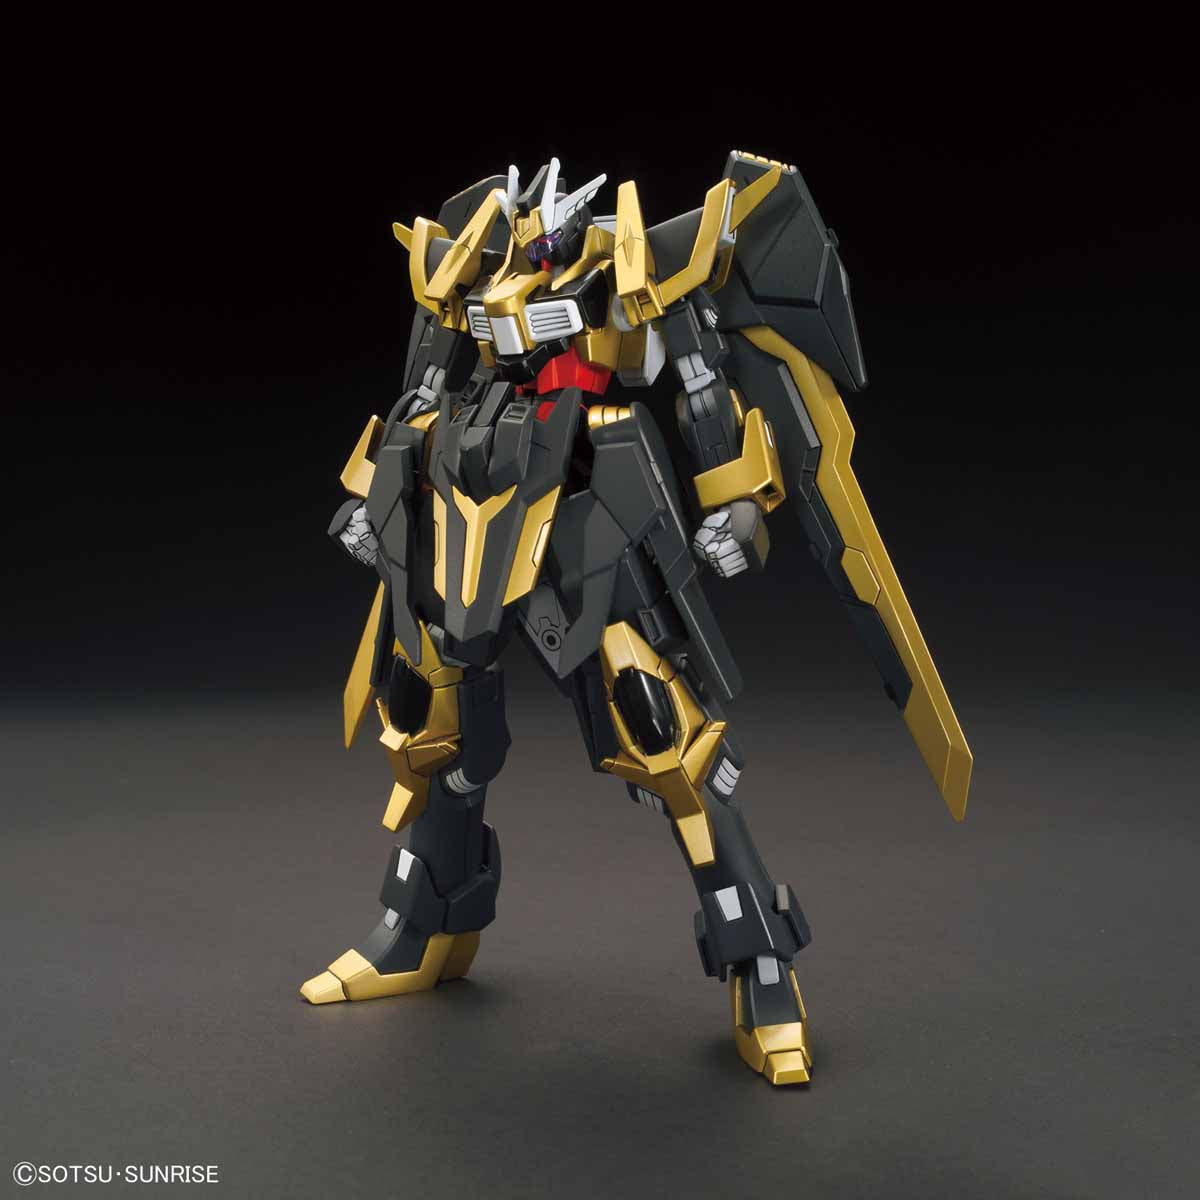 HG Gundam Schwarzritter - Masked Second G [generations]'s mobile suit 1/144